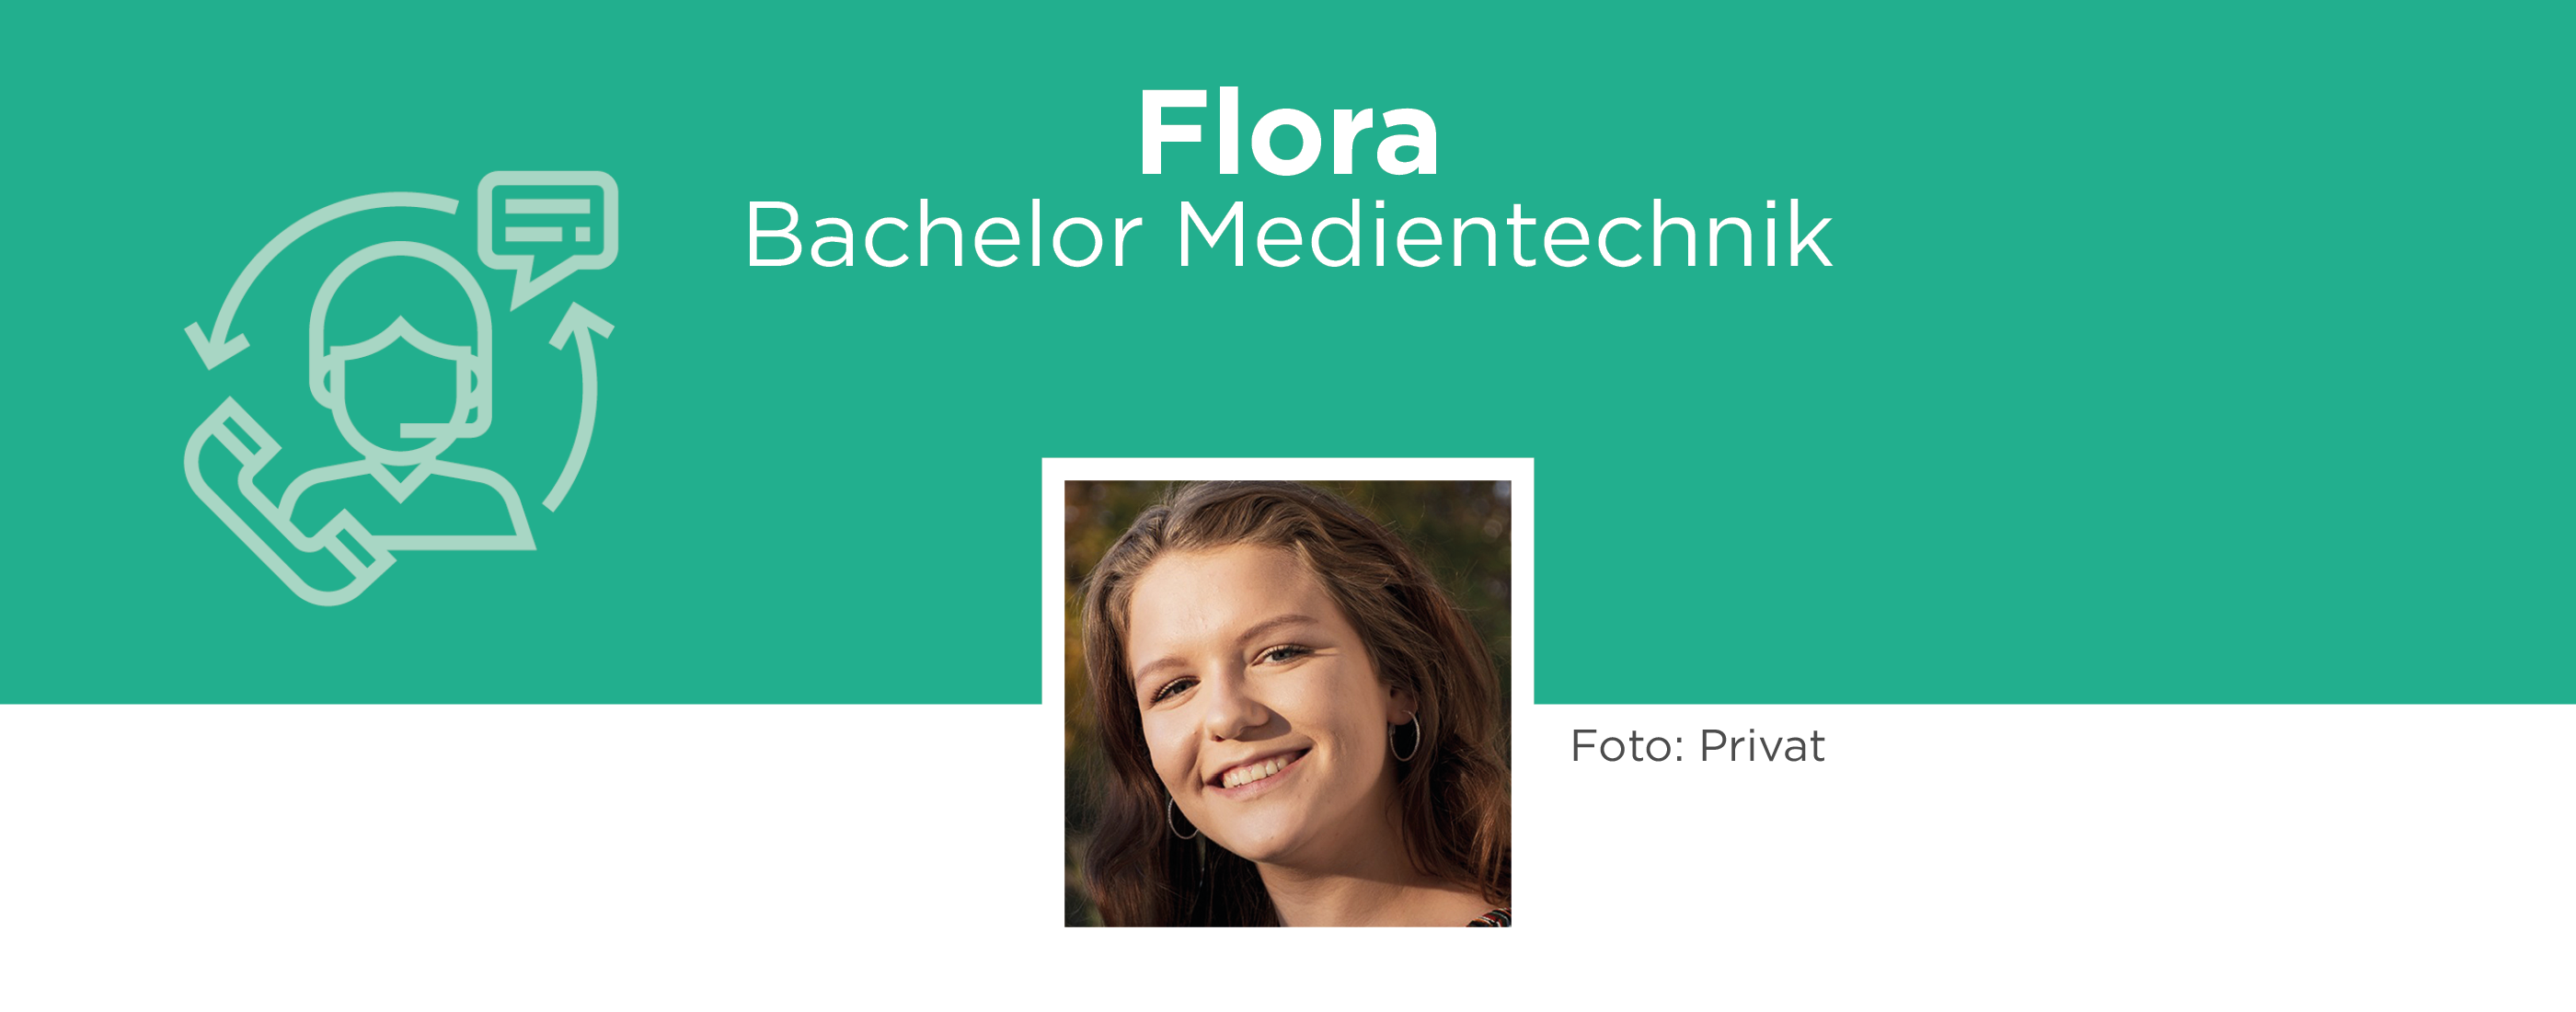 Flora BMT header.png